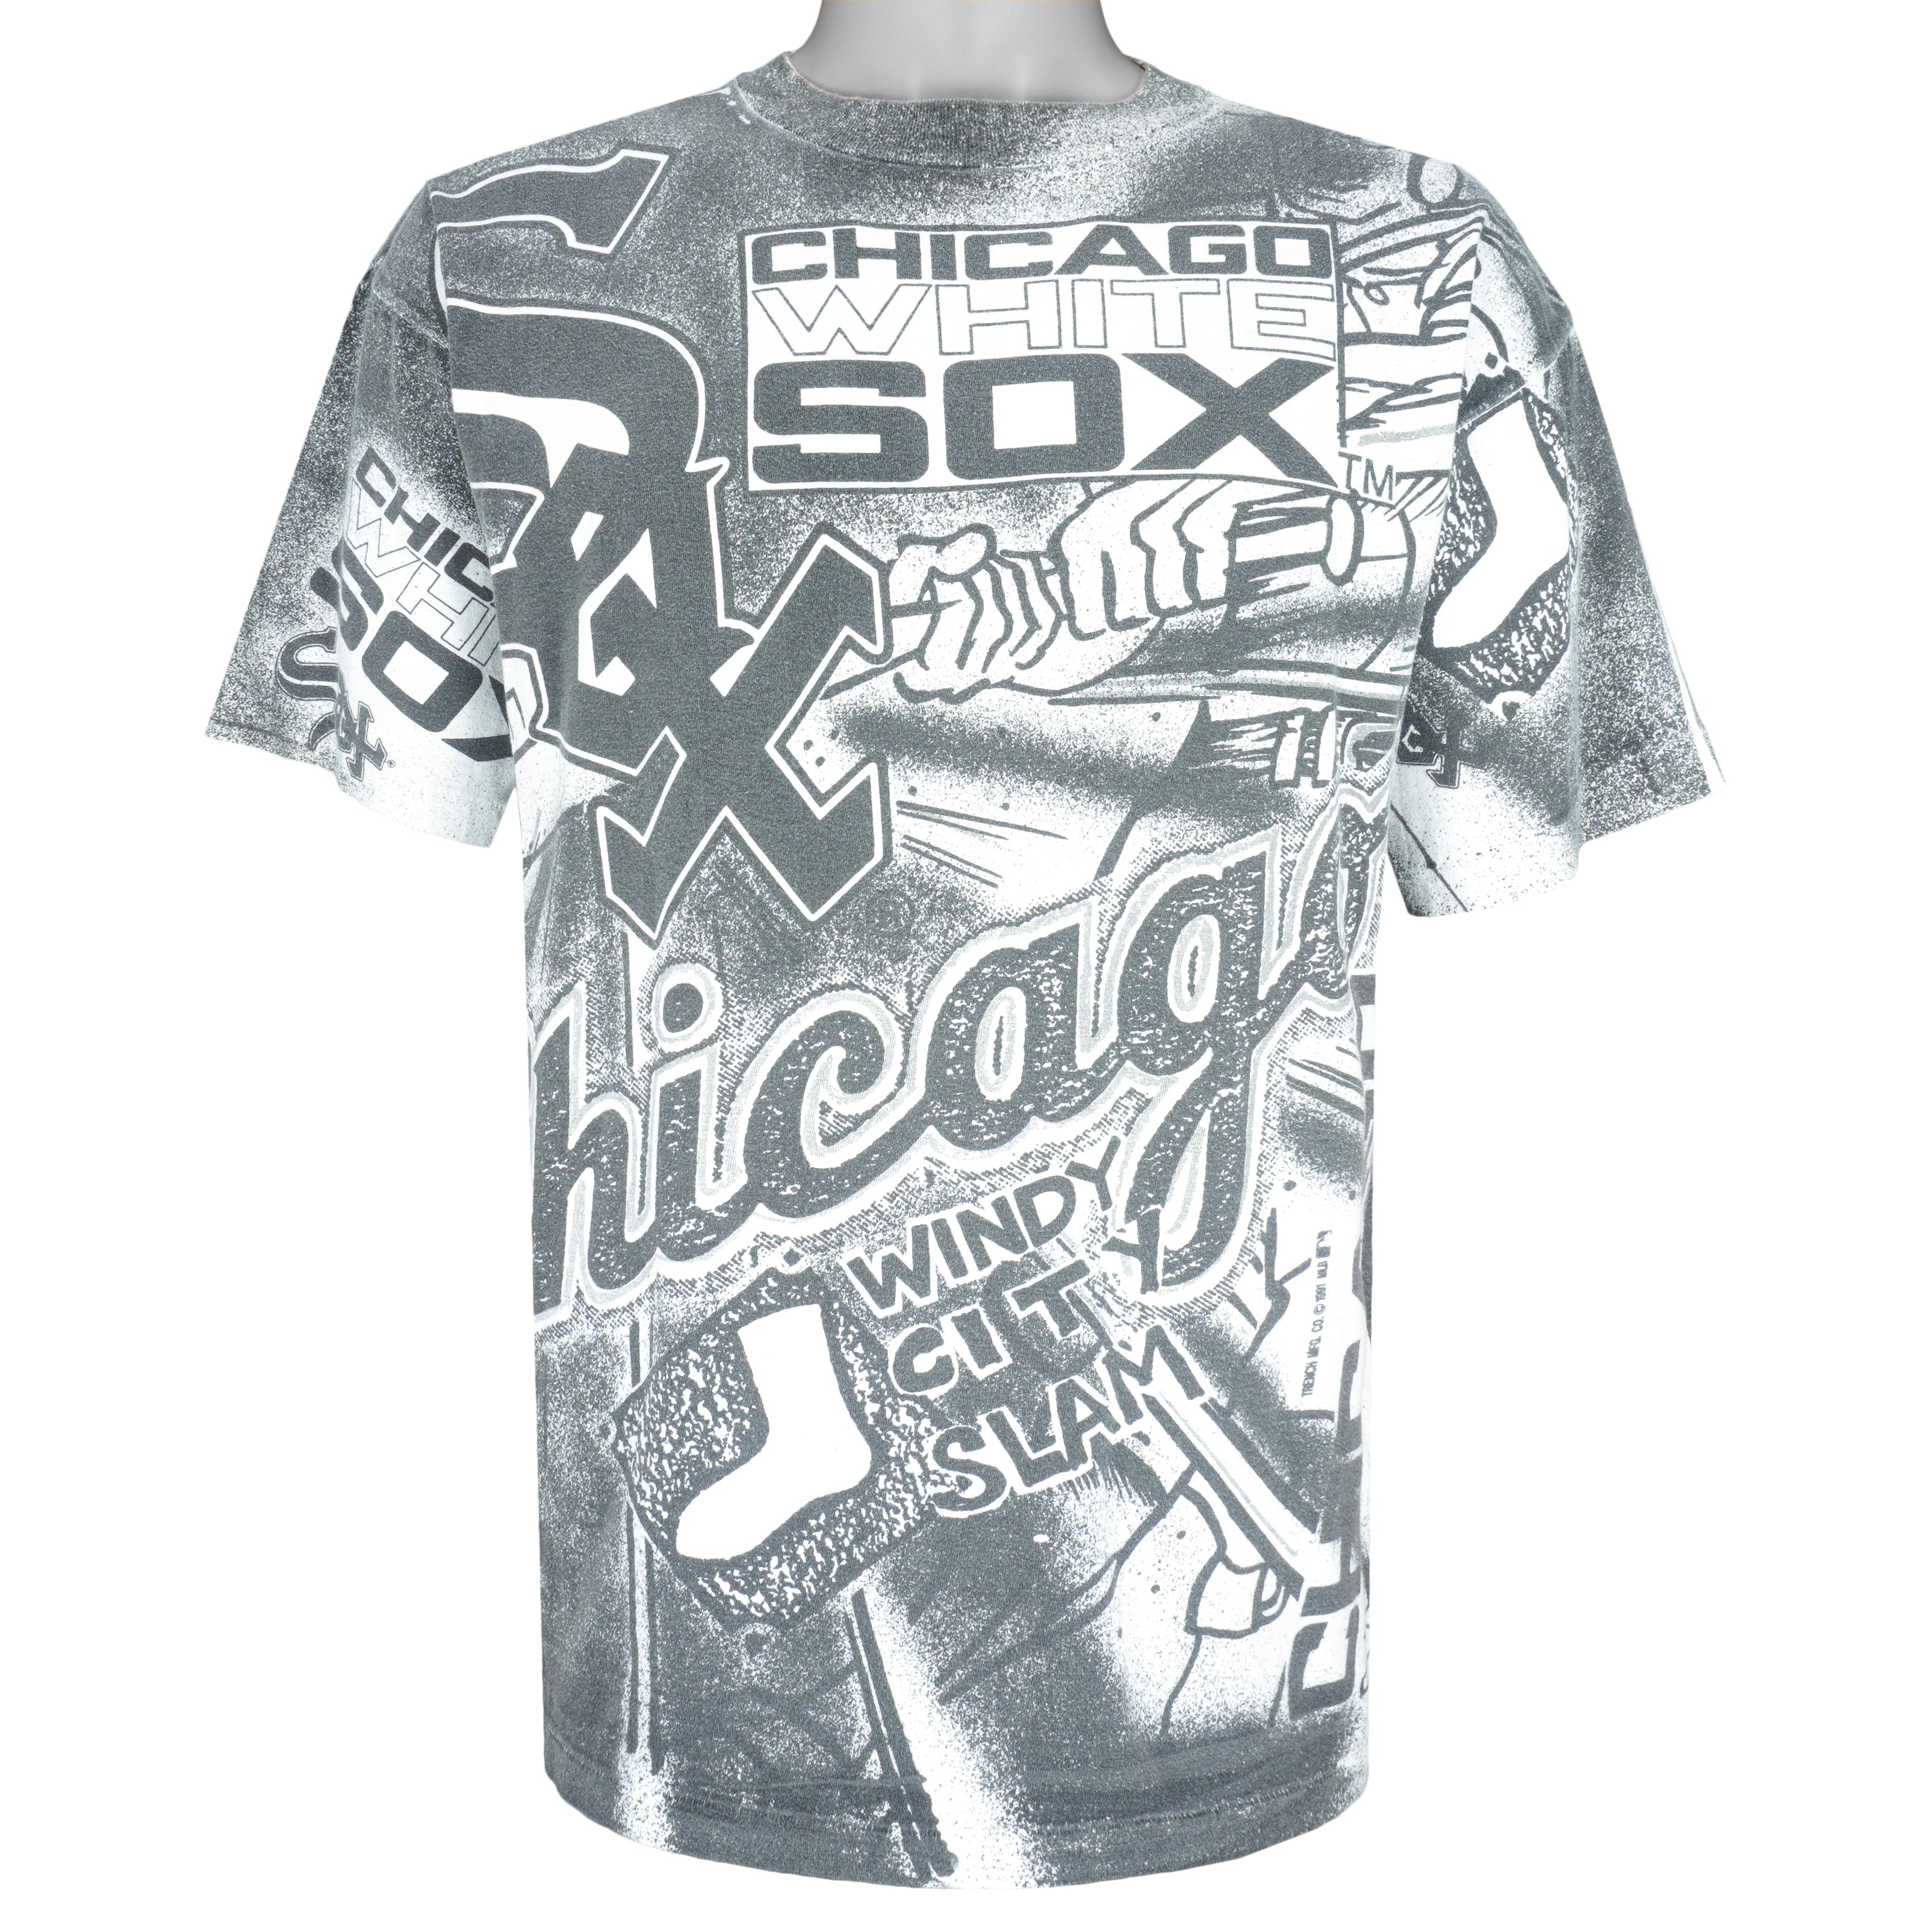 Chicago White Sox Shirts, White Sox Tees, White Sox T-Shirts